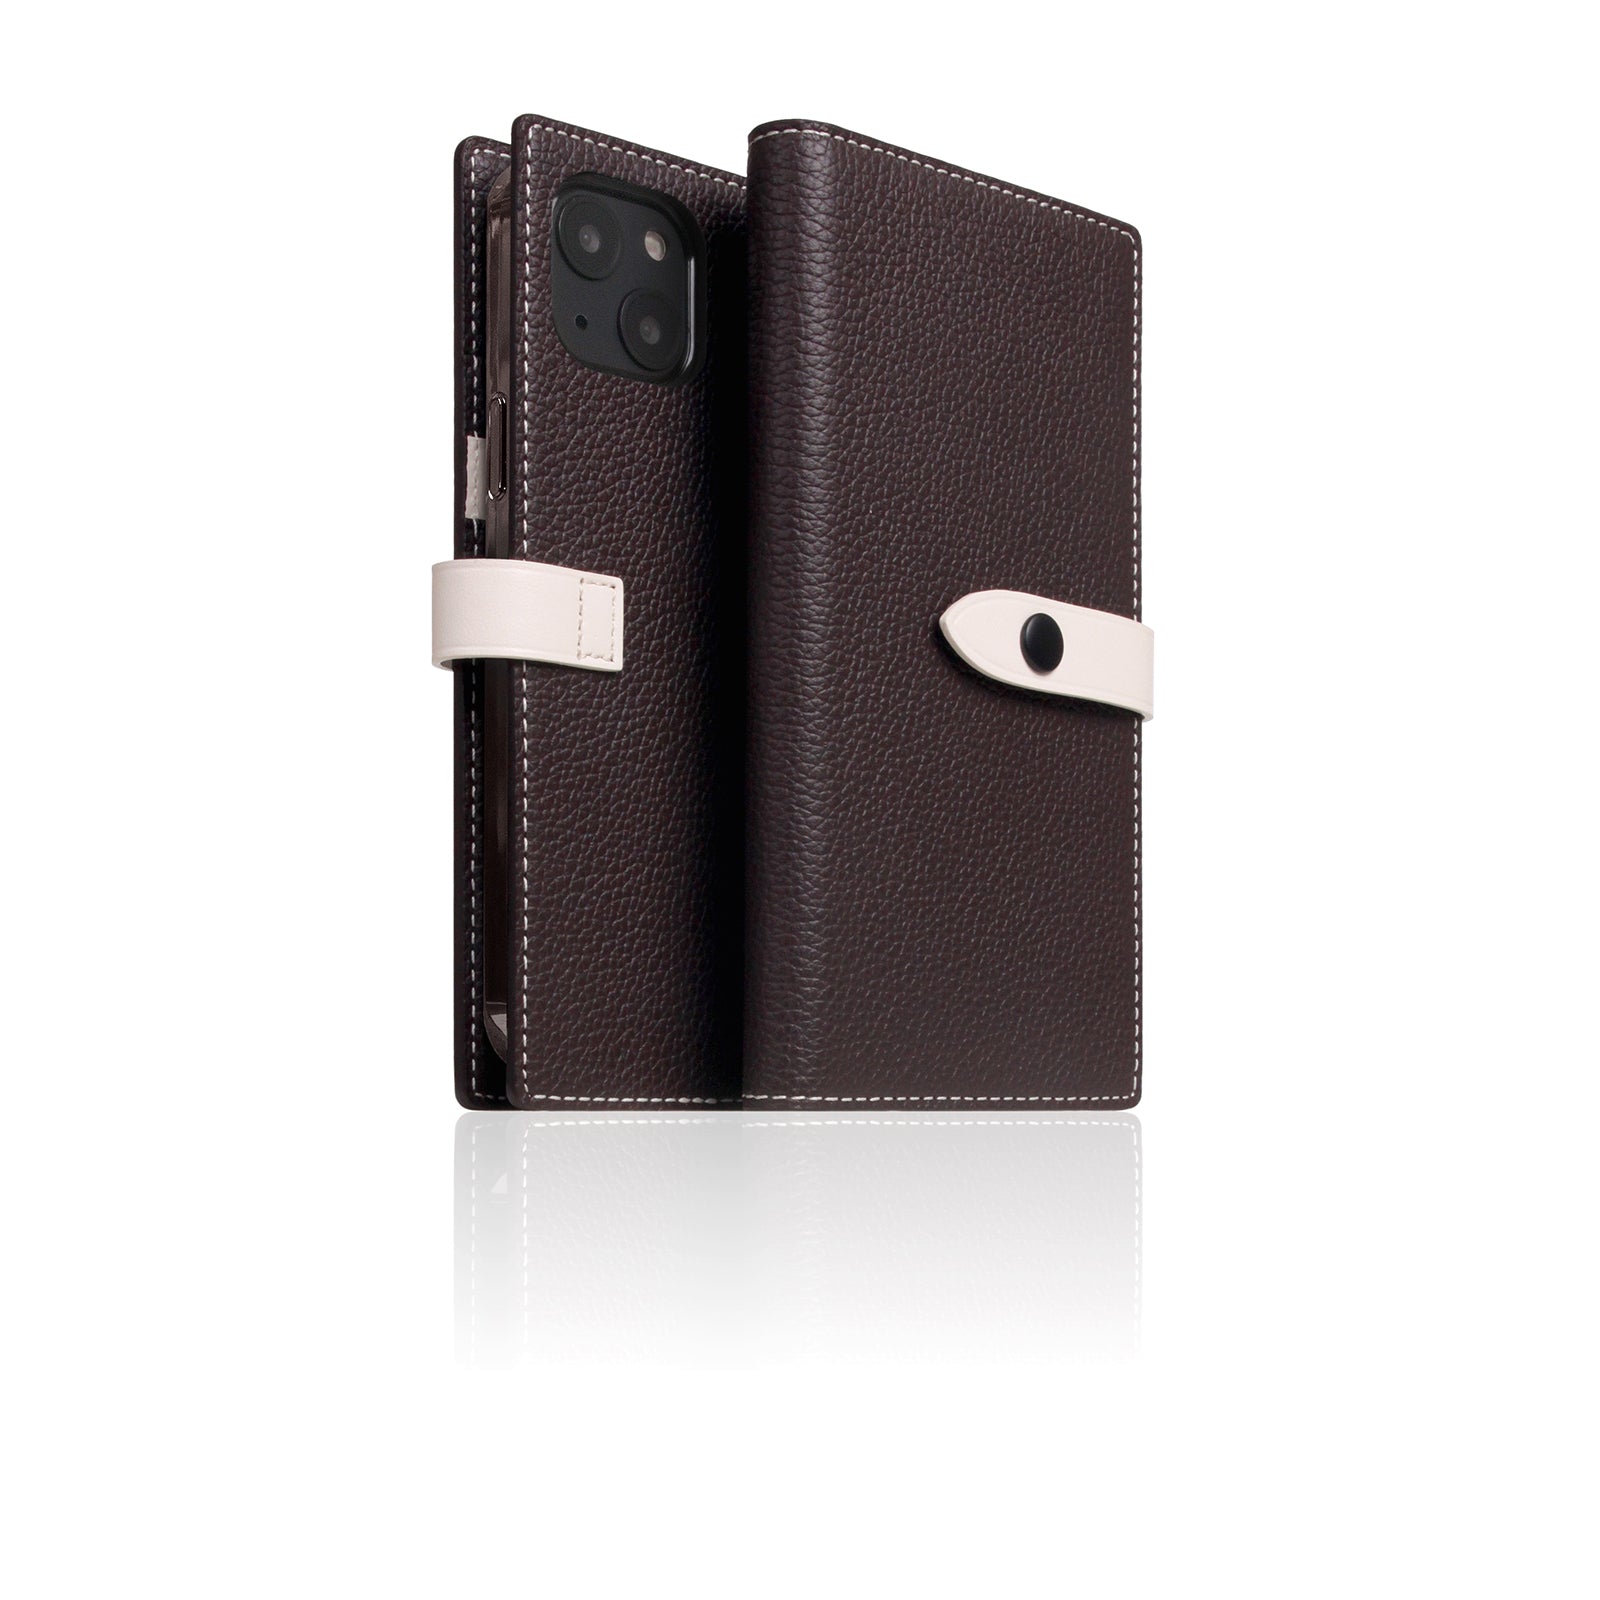 iPhone 12 mini (5.4) Diary Wallet Folio Case